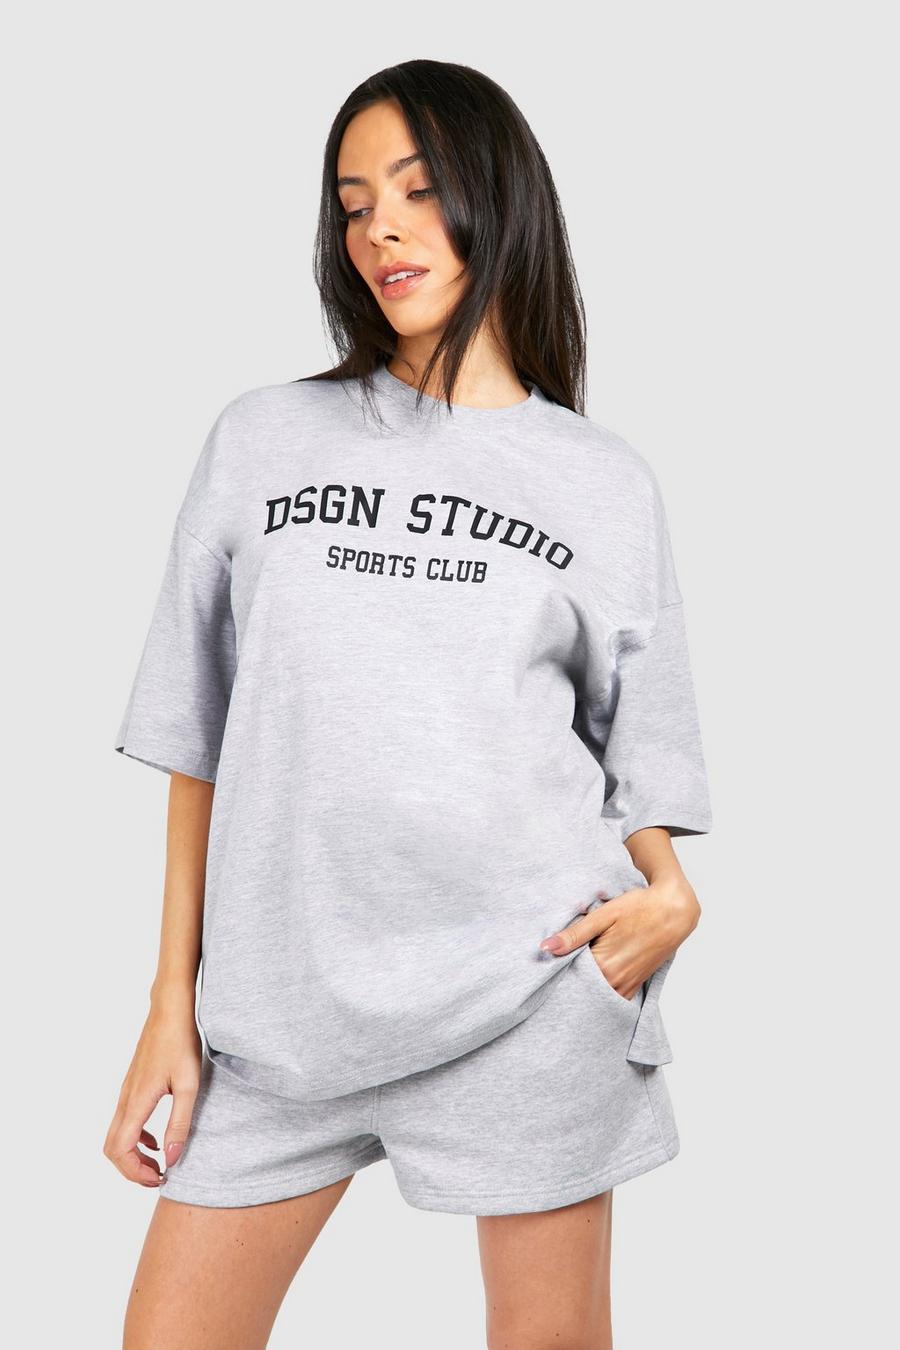 T-shirt Premaman oversize con stampa Dsgn Studio, Grey marl image number 1